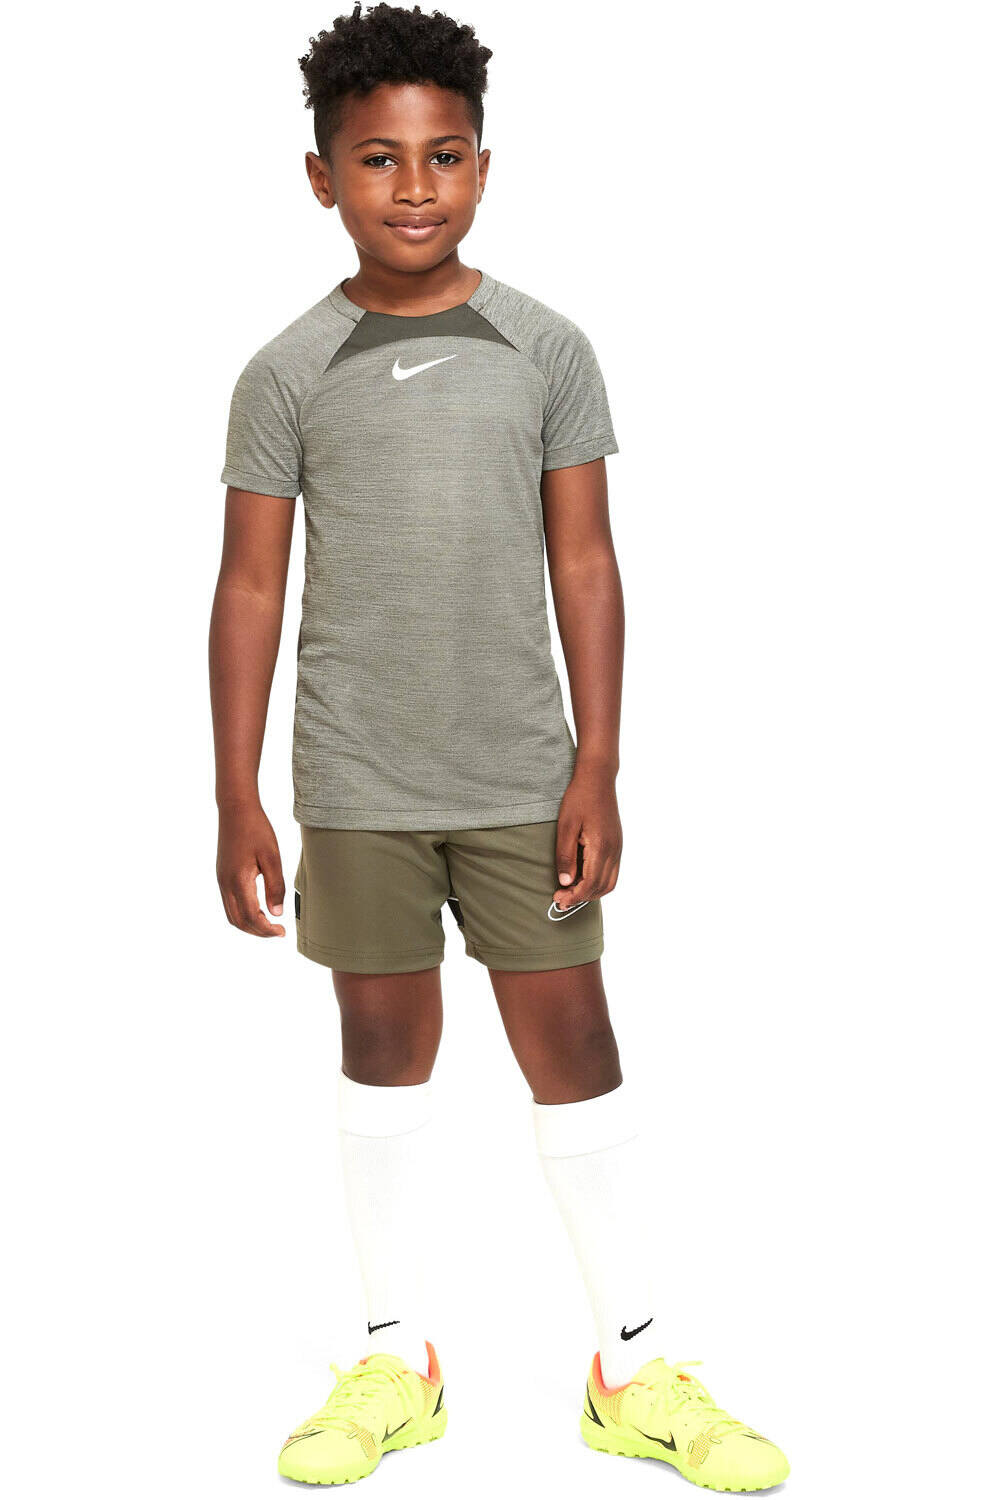 Nike camisetas entrenamiento futbol manga corta niño ACADEMY TOP vista frontal